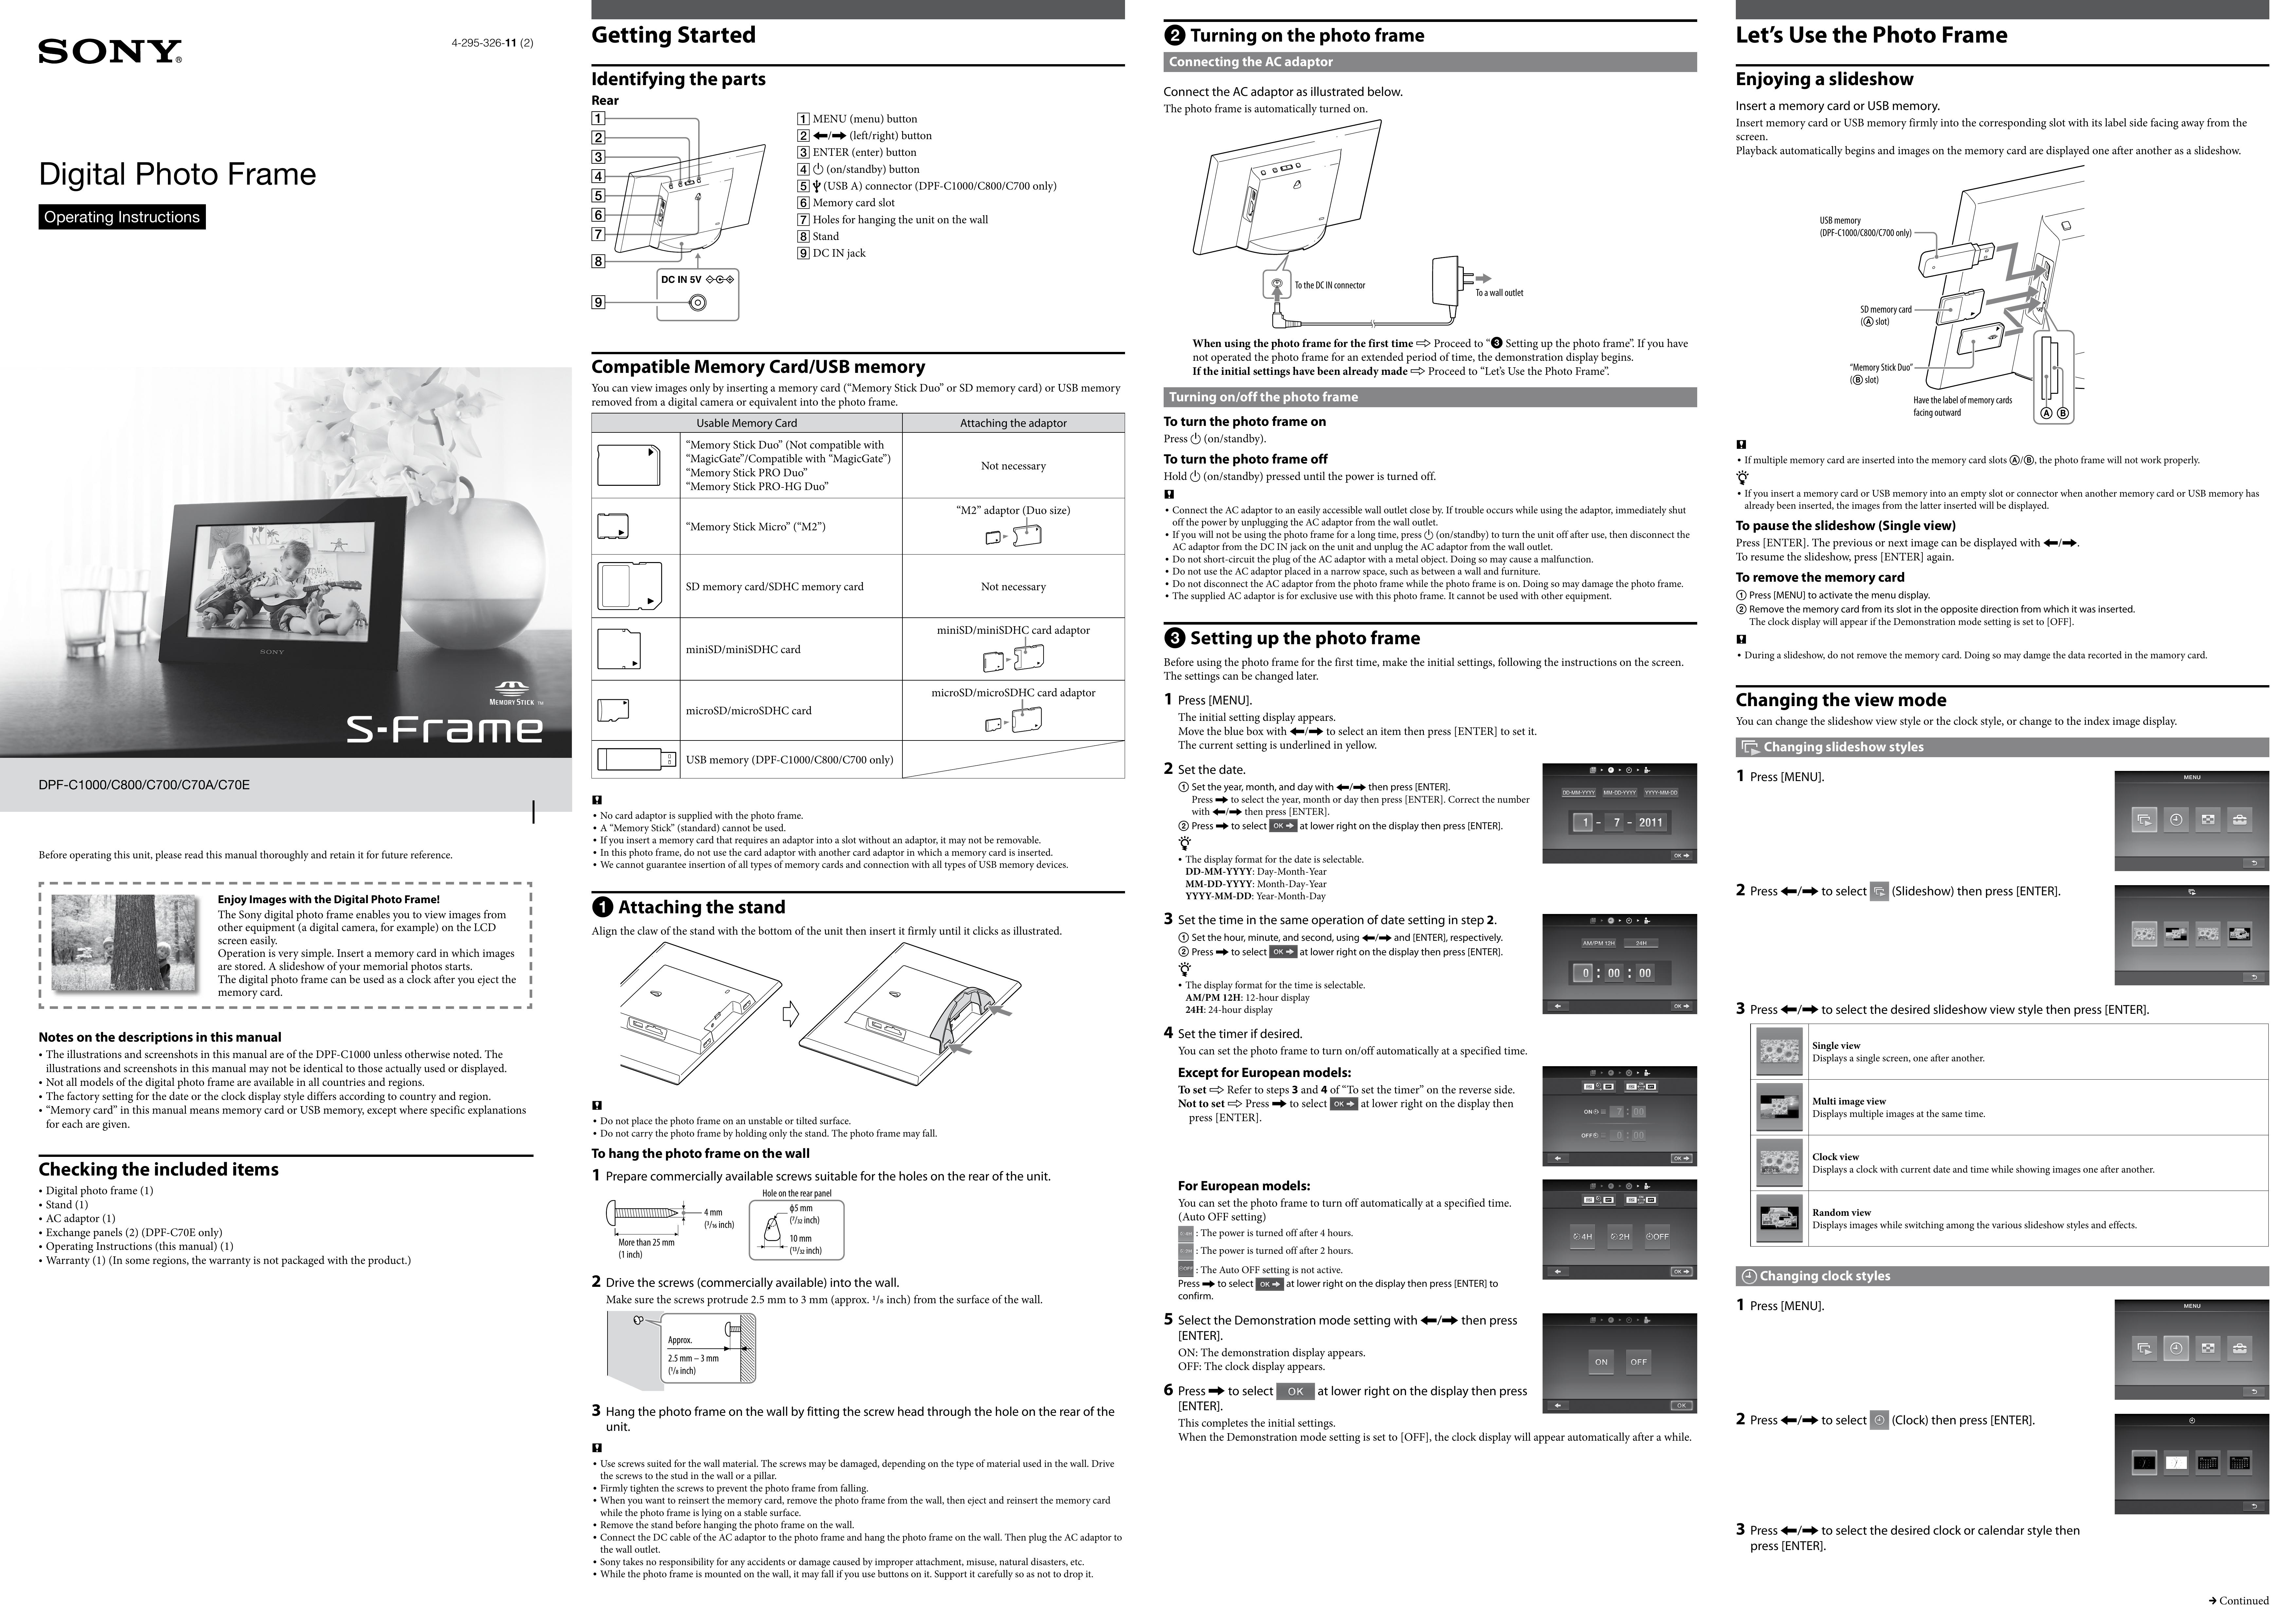 Sony DPF-C1000 Digital Photo Frame User Manual